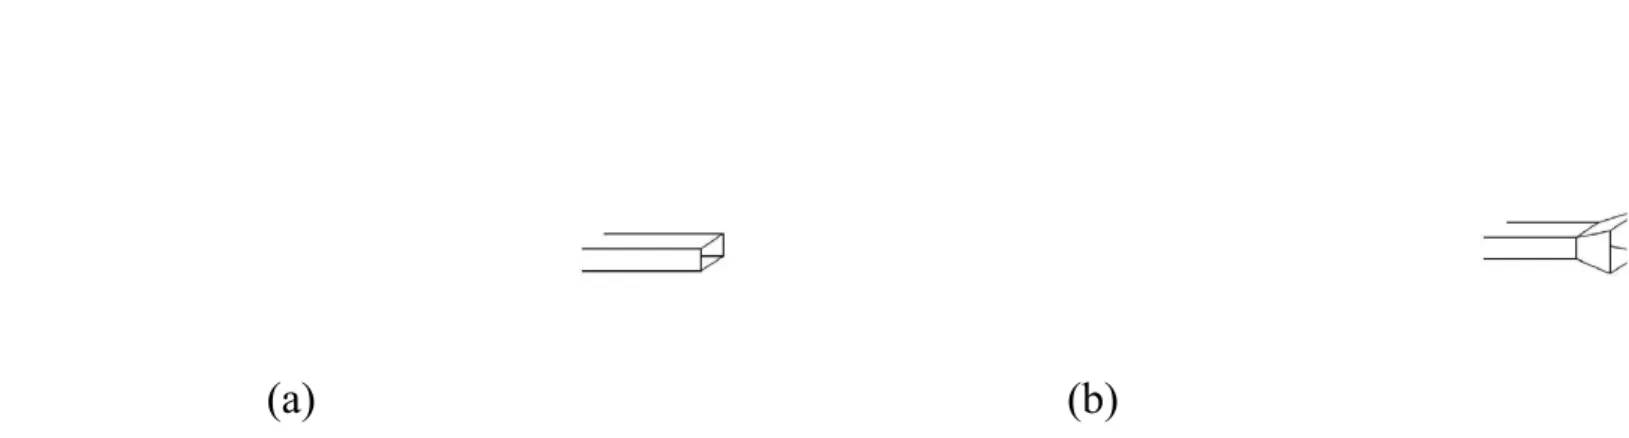 Gambar 1.2. Antena sebagai terminal : a. Bagian akhir pandu gelombang persegi., b. Bagian akhir pandu gelombang persegi dengan sebuah antena piramid horn.